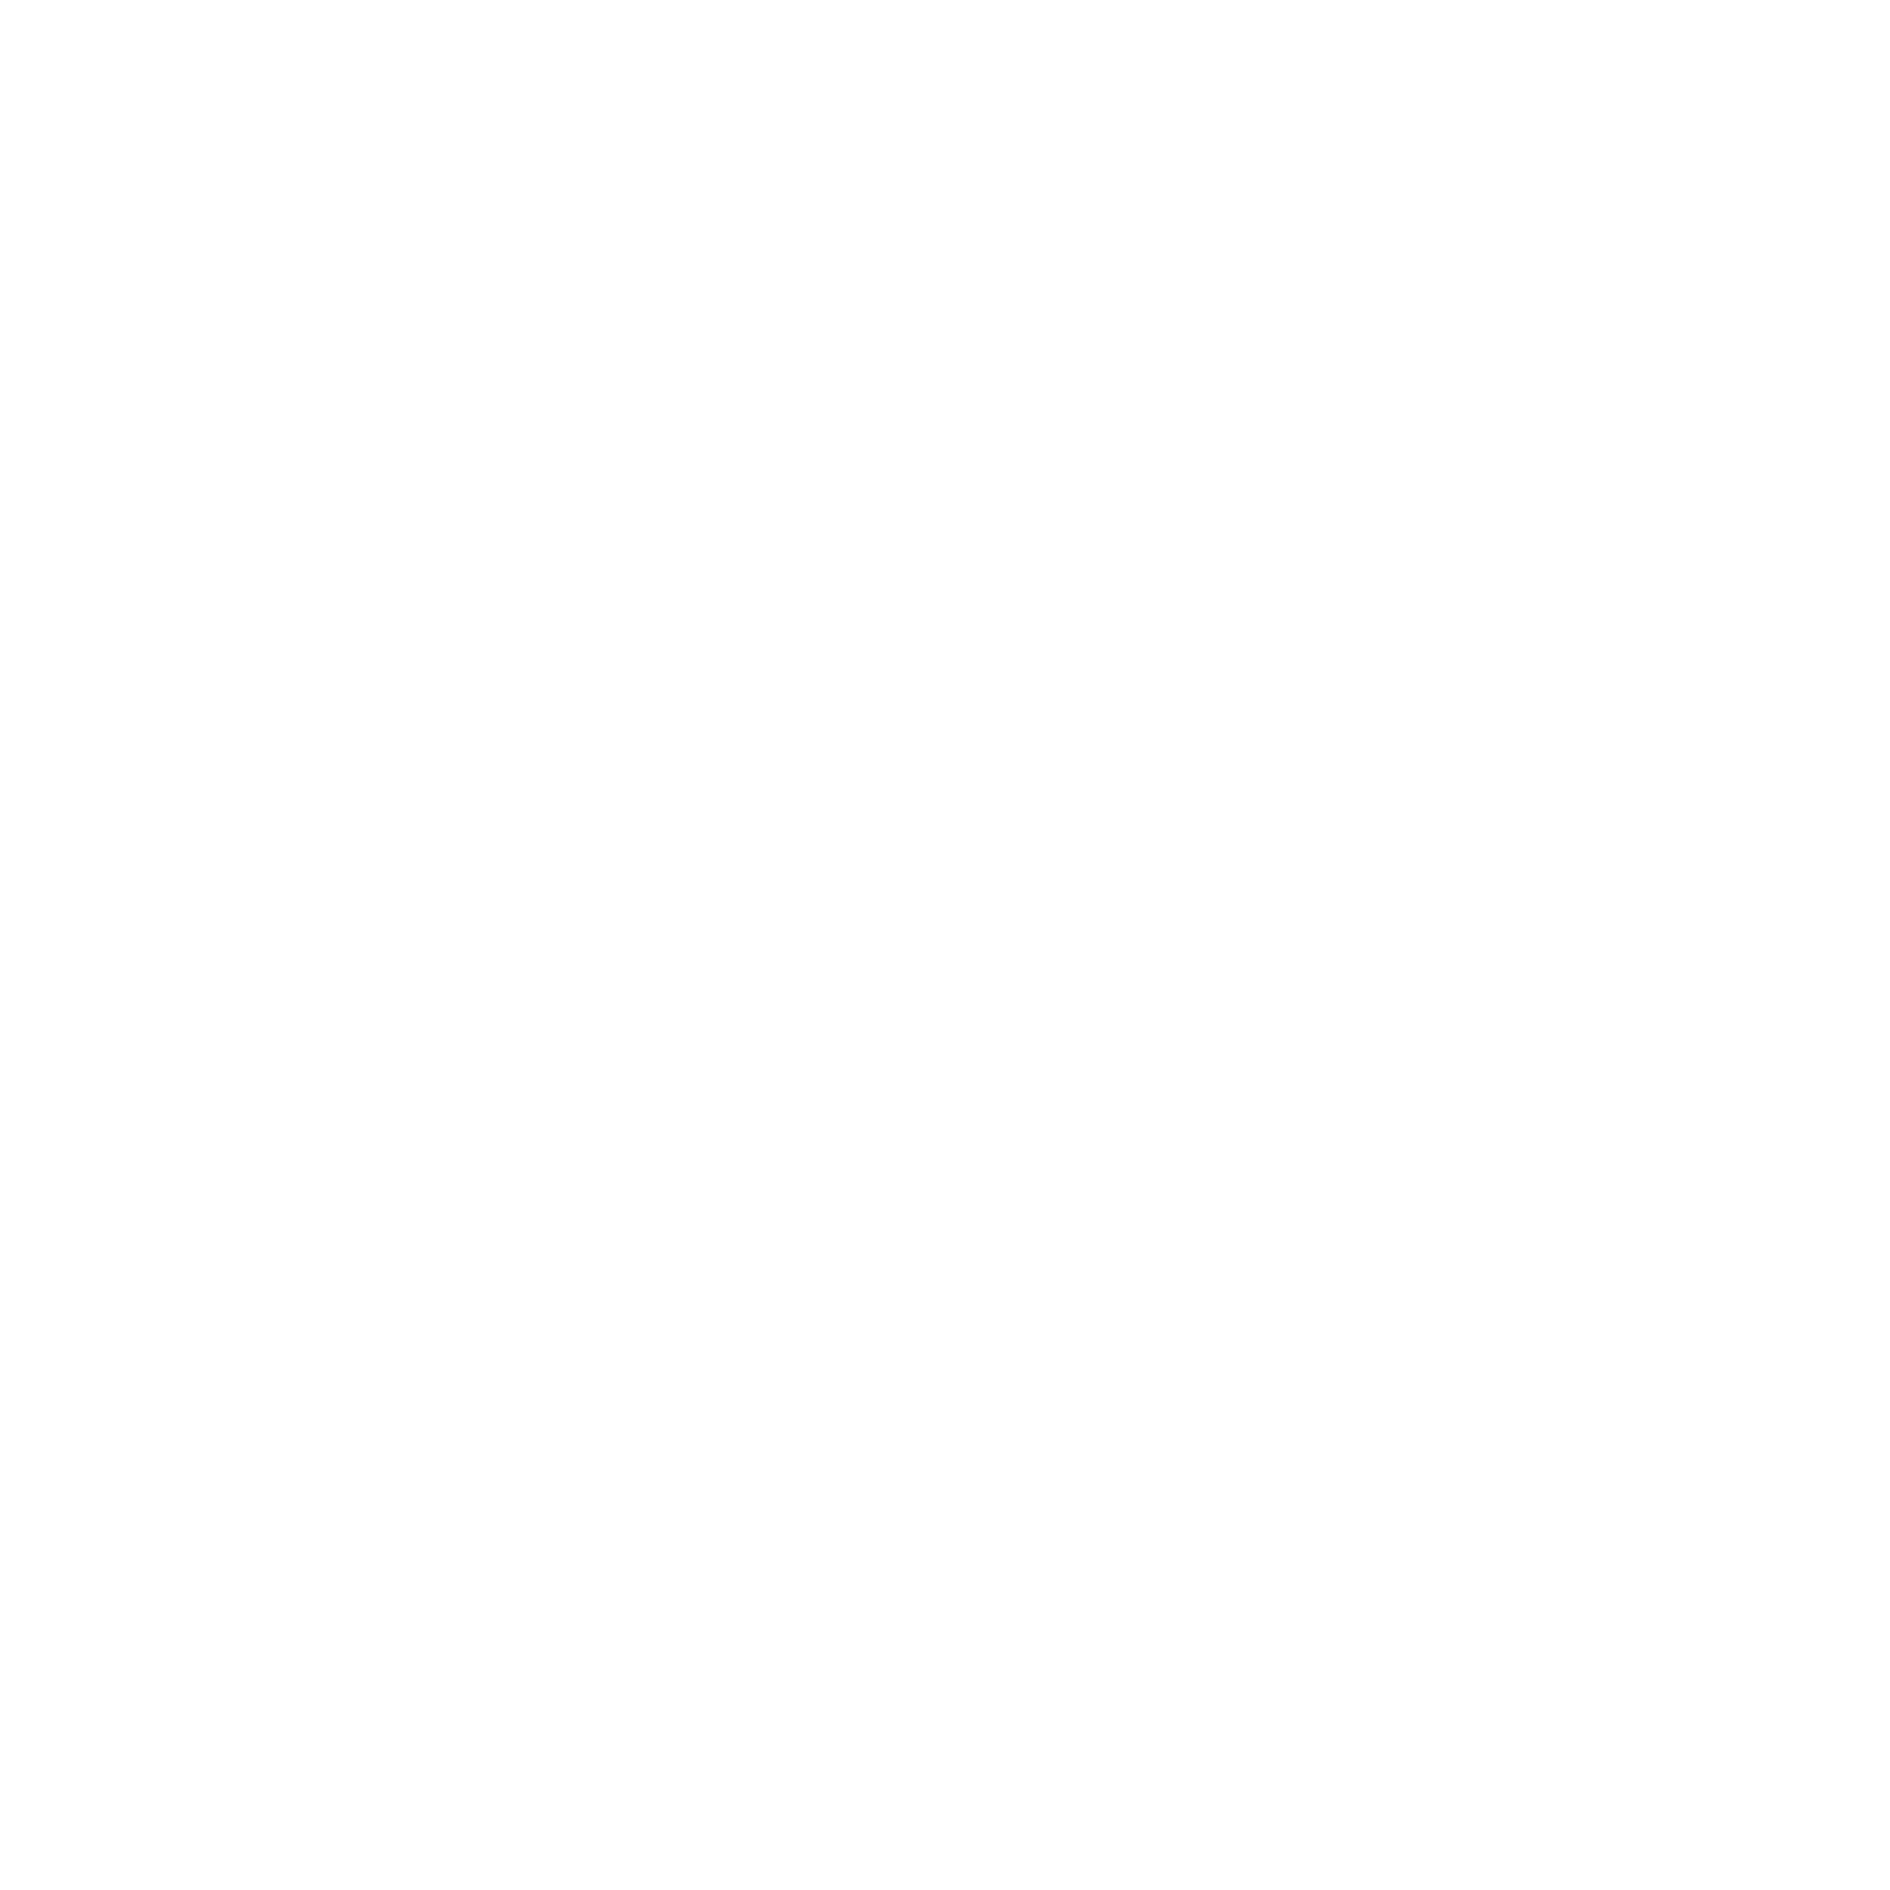 Lewisham Council Logo